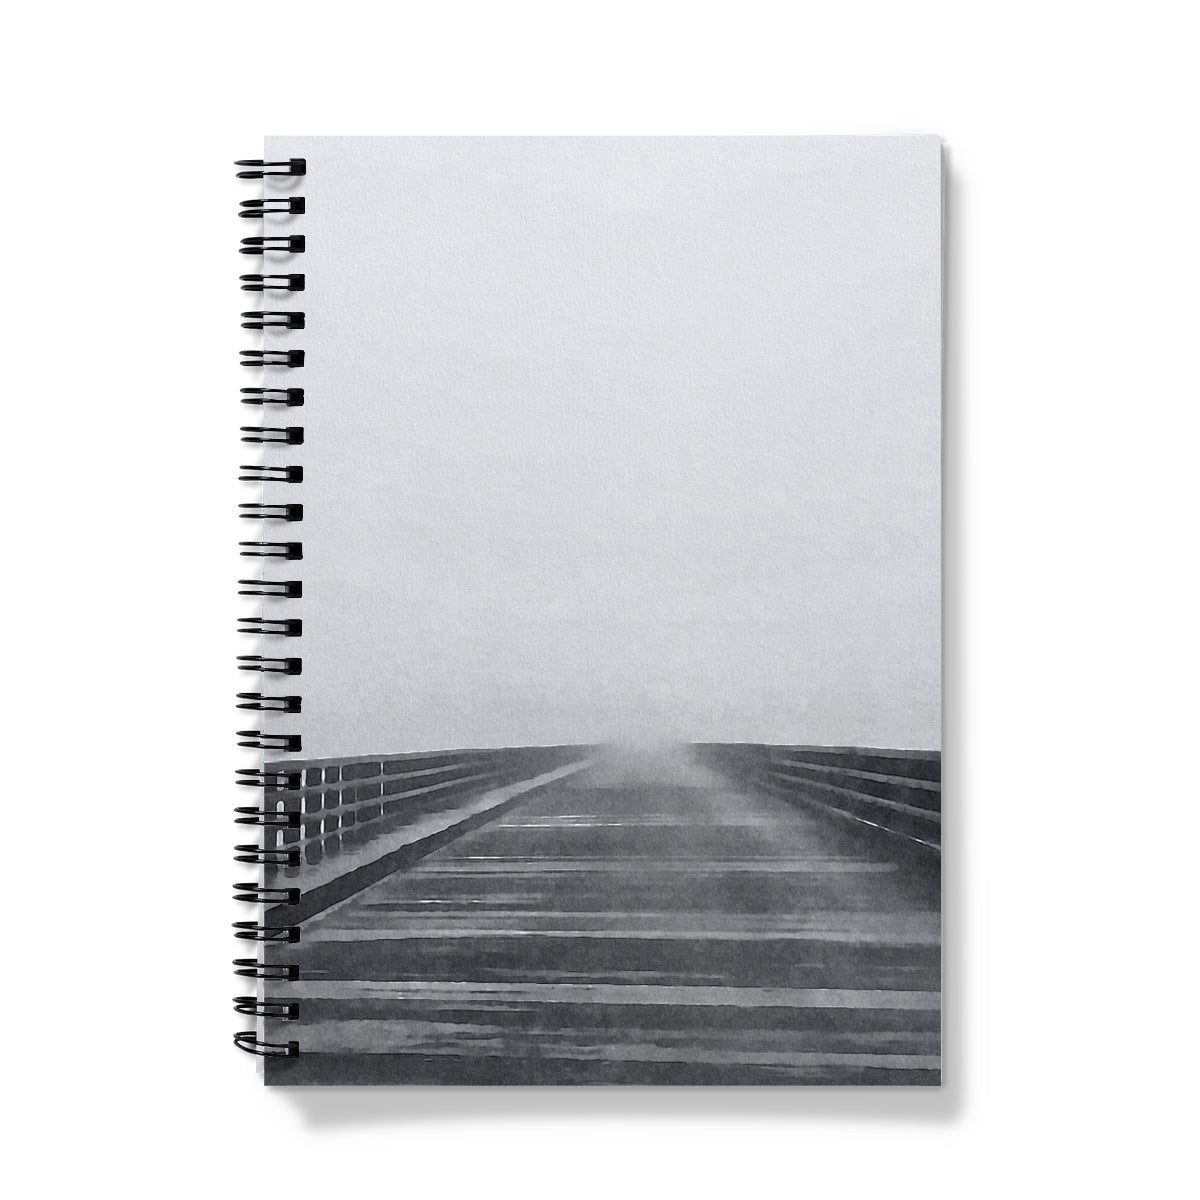 5x7 spiral bound notebook -mystical bridge - powder point bridge duxbury ma by jacqueline mb designs 